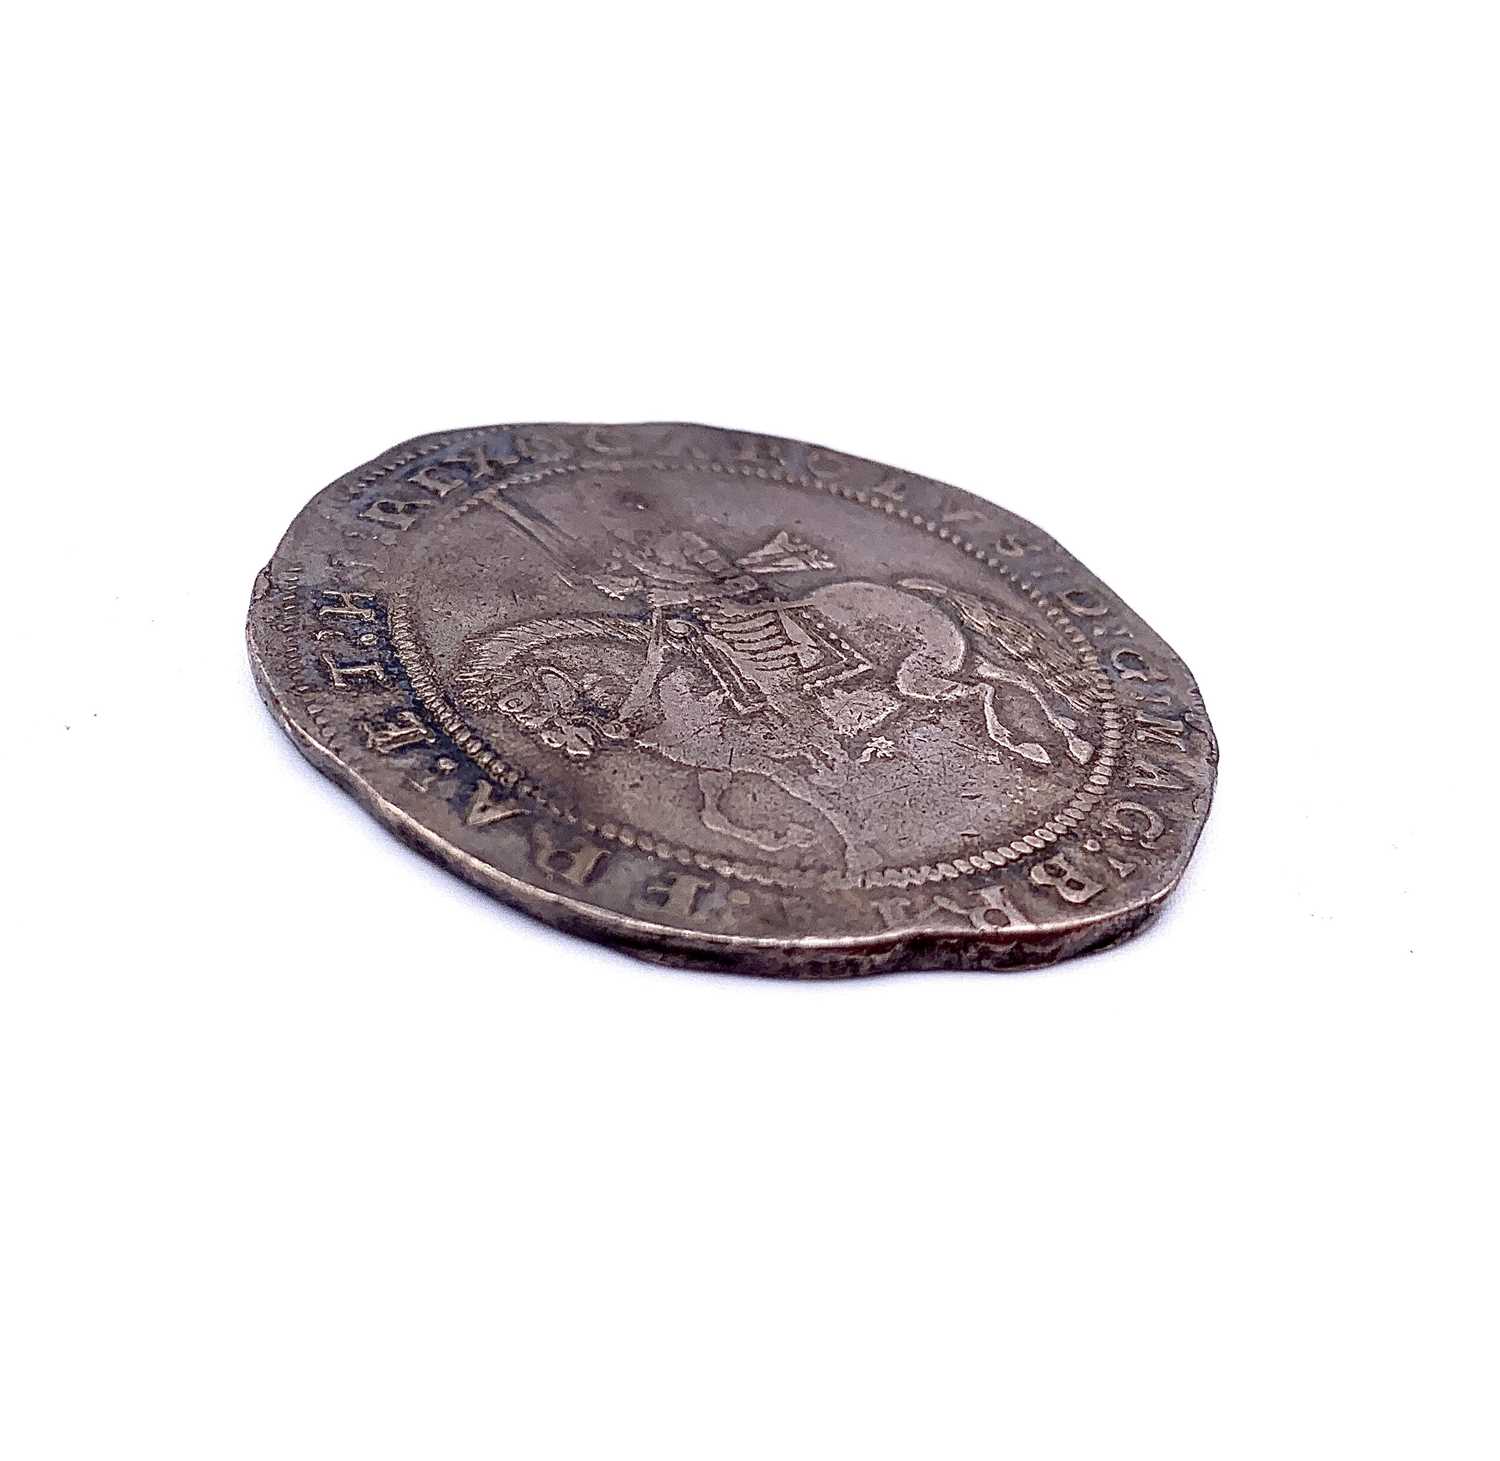 Charles I Crown, Truro Mint (Cornish interest). 1642-33 MM Rose, nice grade - good detail. - Image 2 of 3